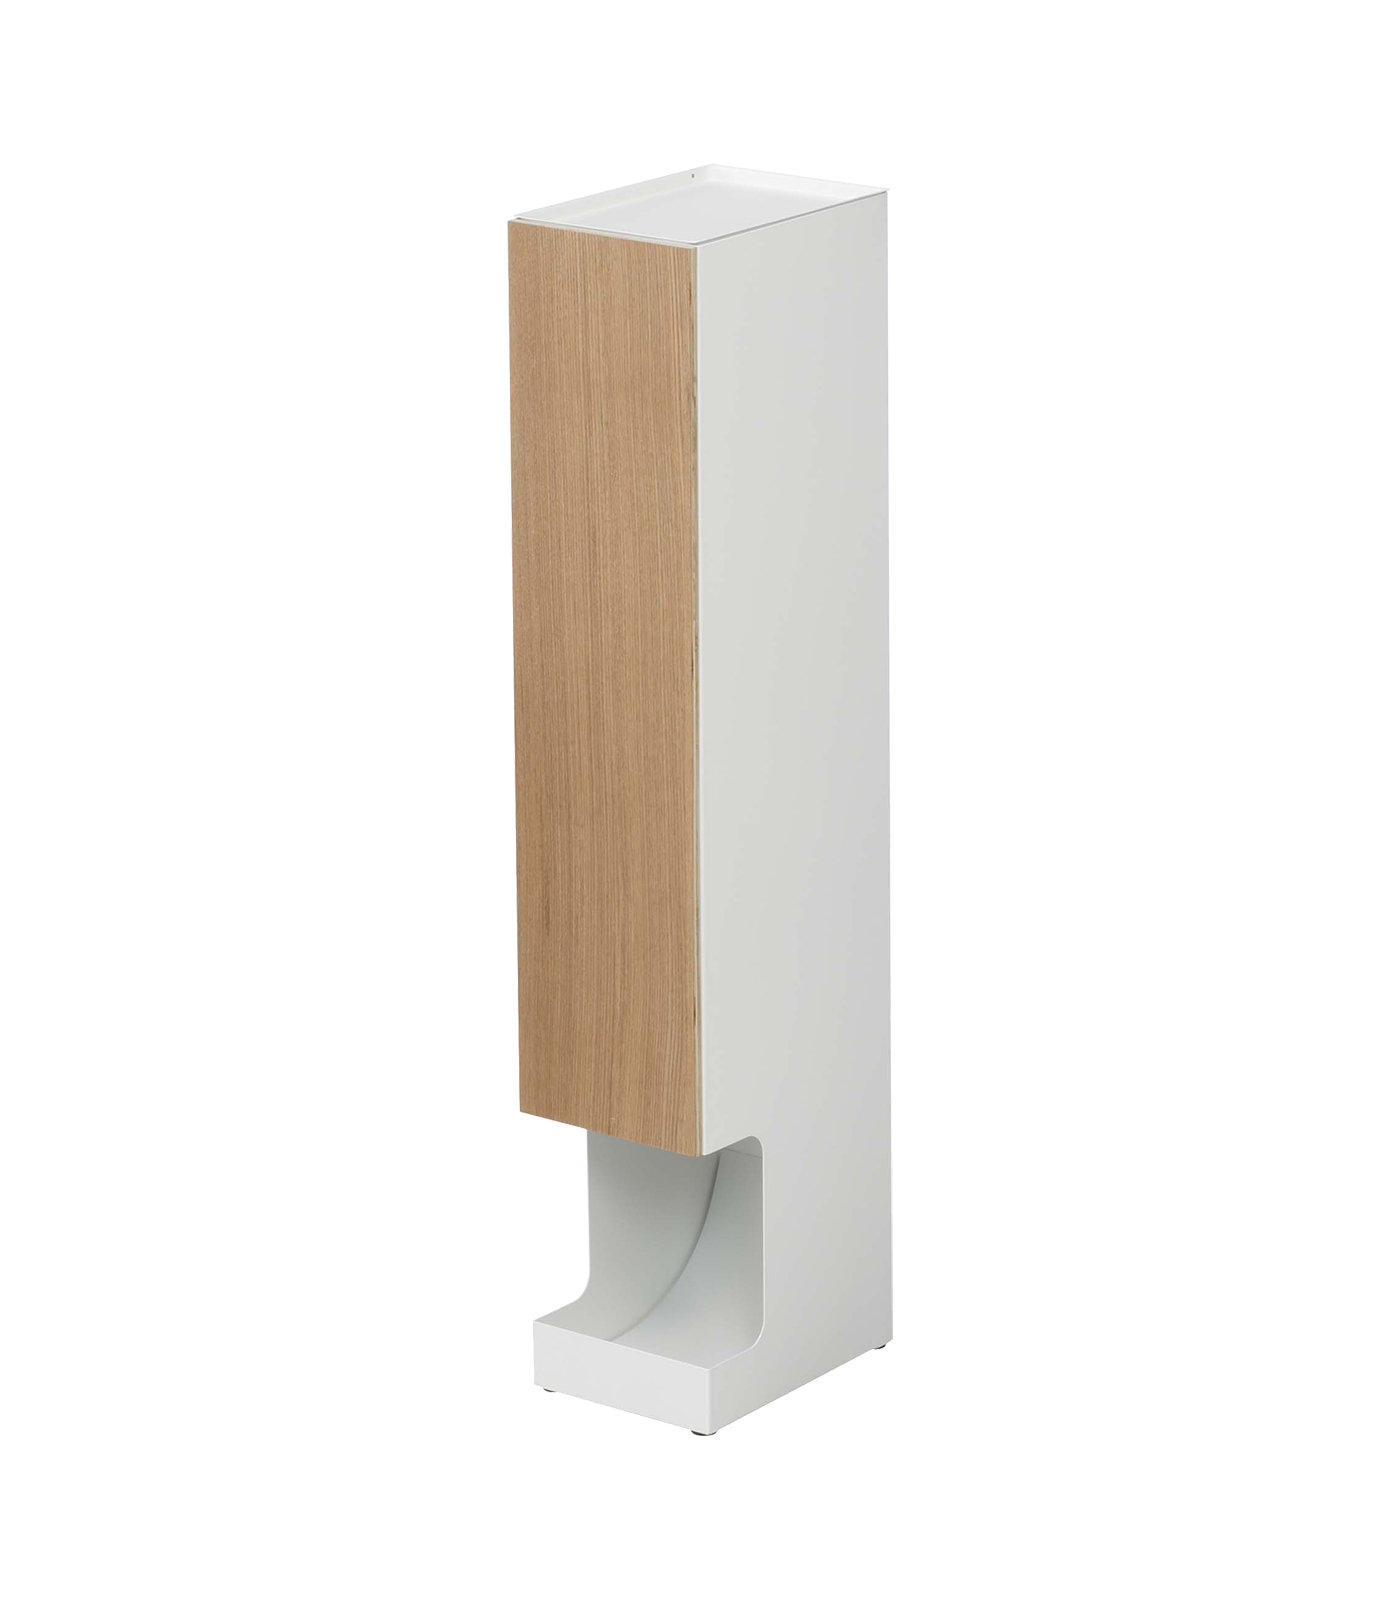 Yamazaki USA Yamazaki Home Toilet Paper Dispenser, Bathroom Storage Holder  Stand, Steel + Wood, Holds 8 rolls & Reviews